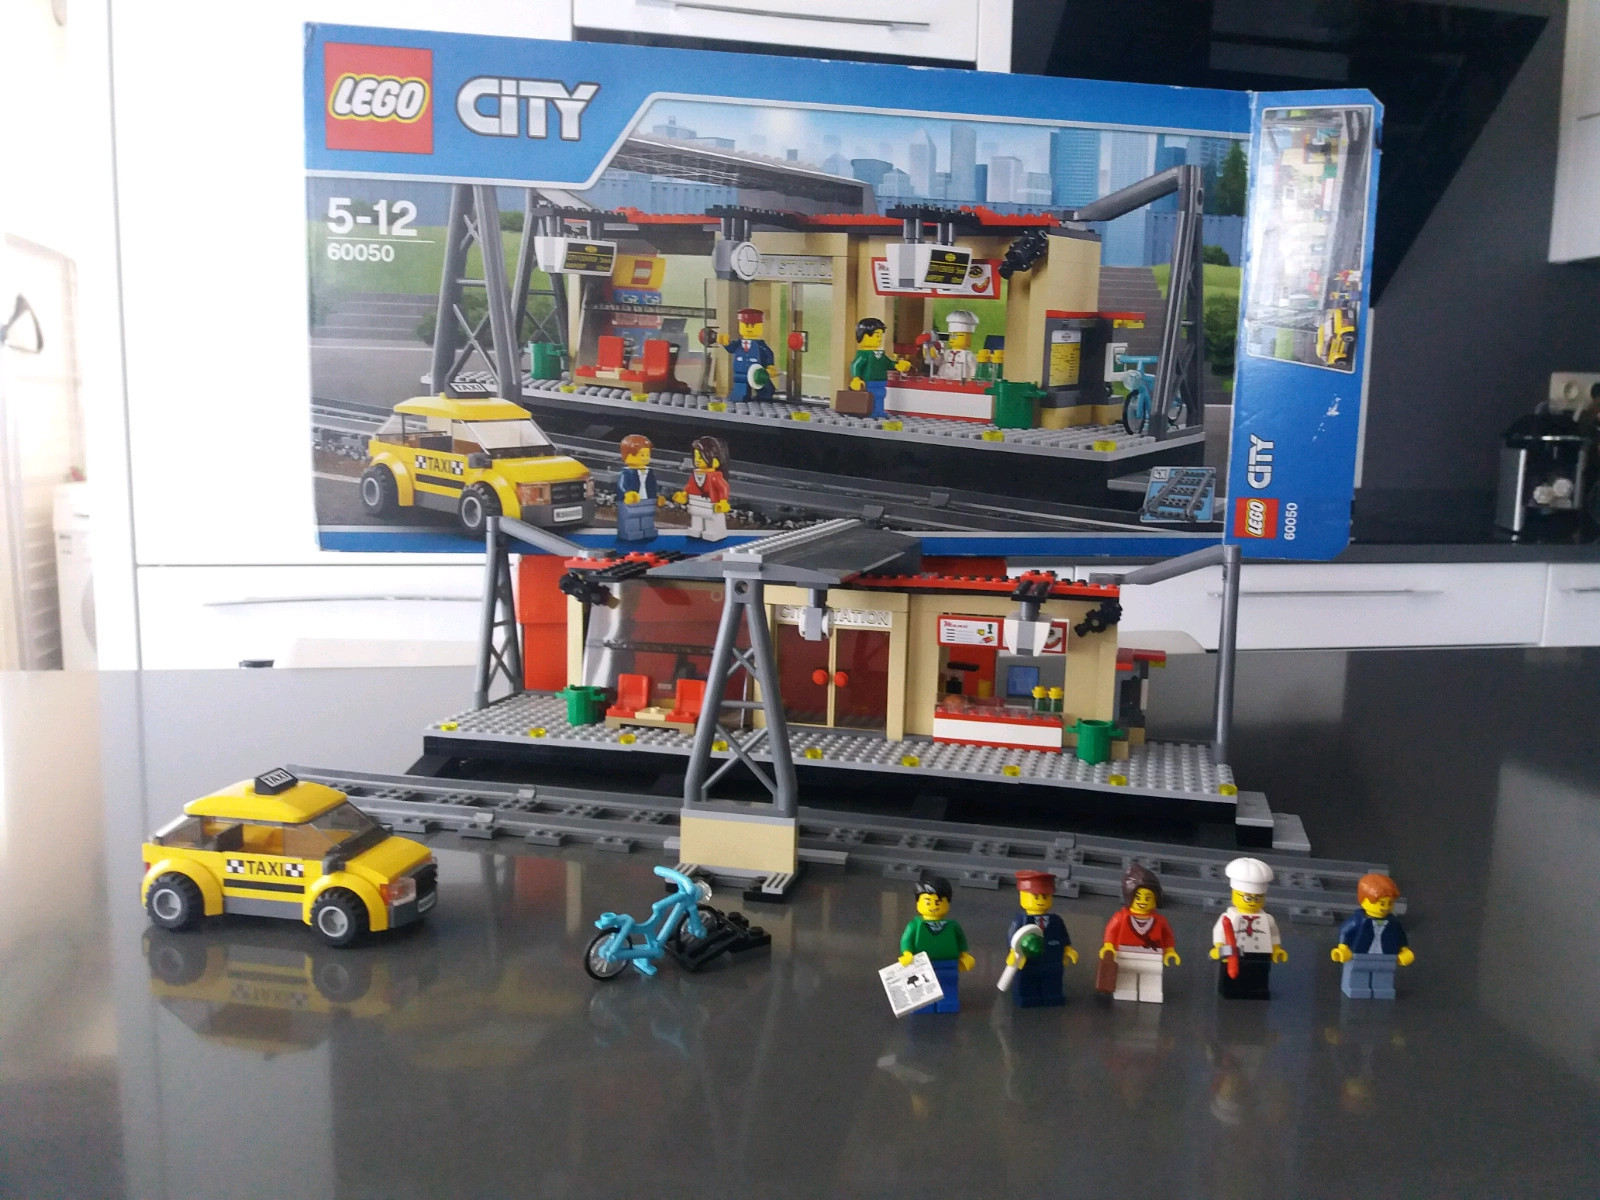 LEGO City 60050 pas cher, La gare